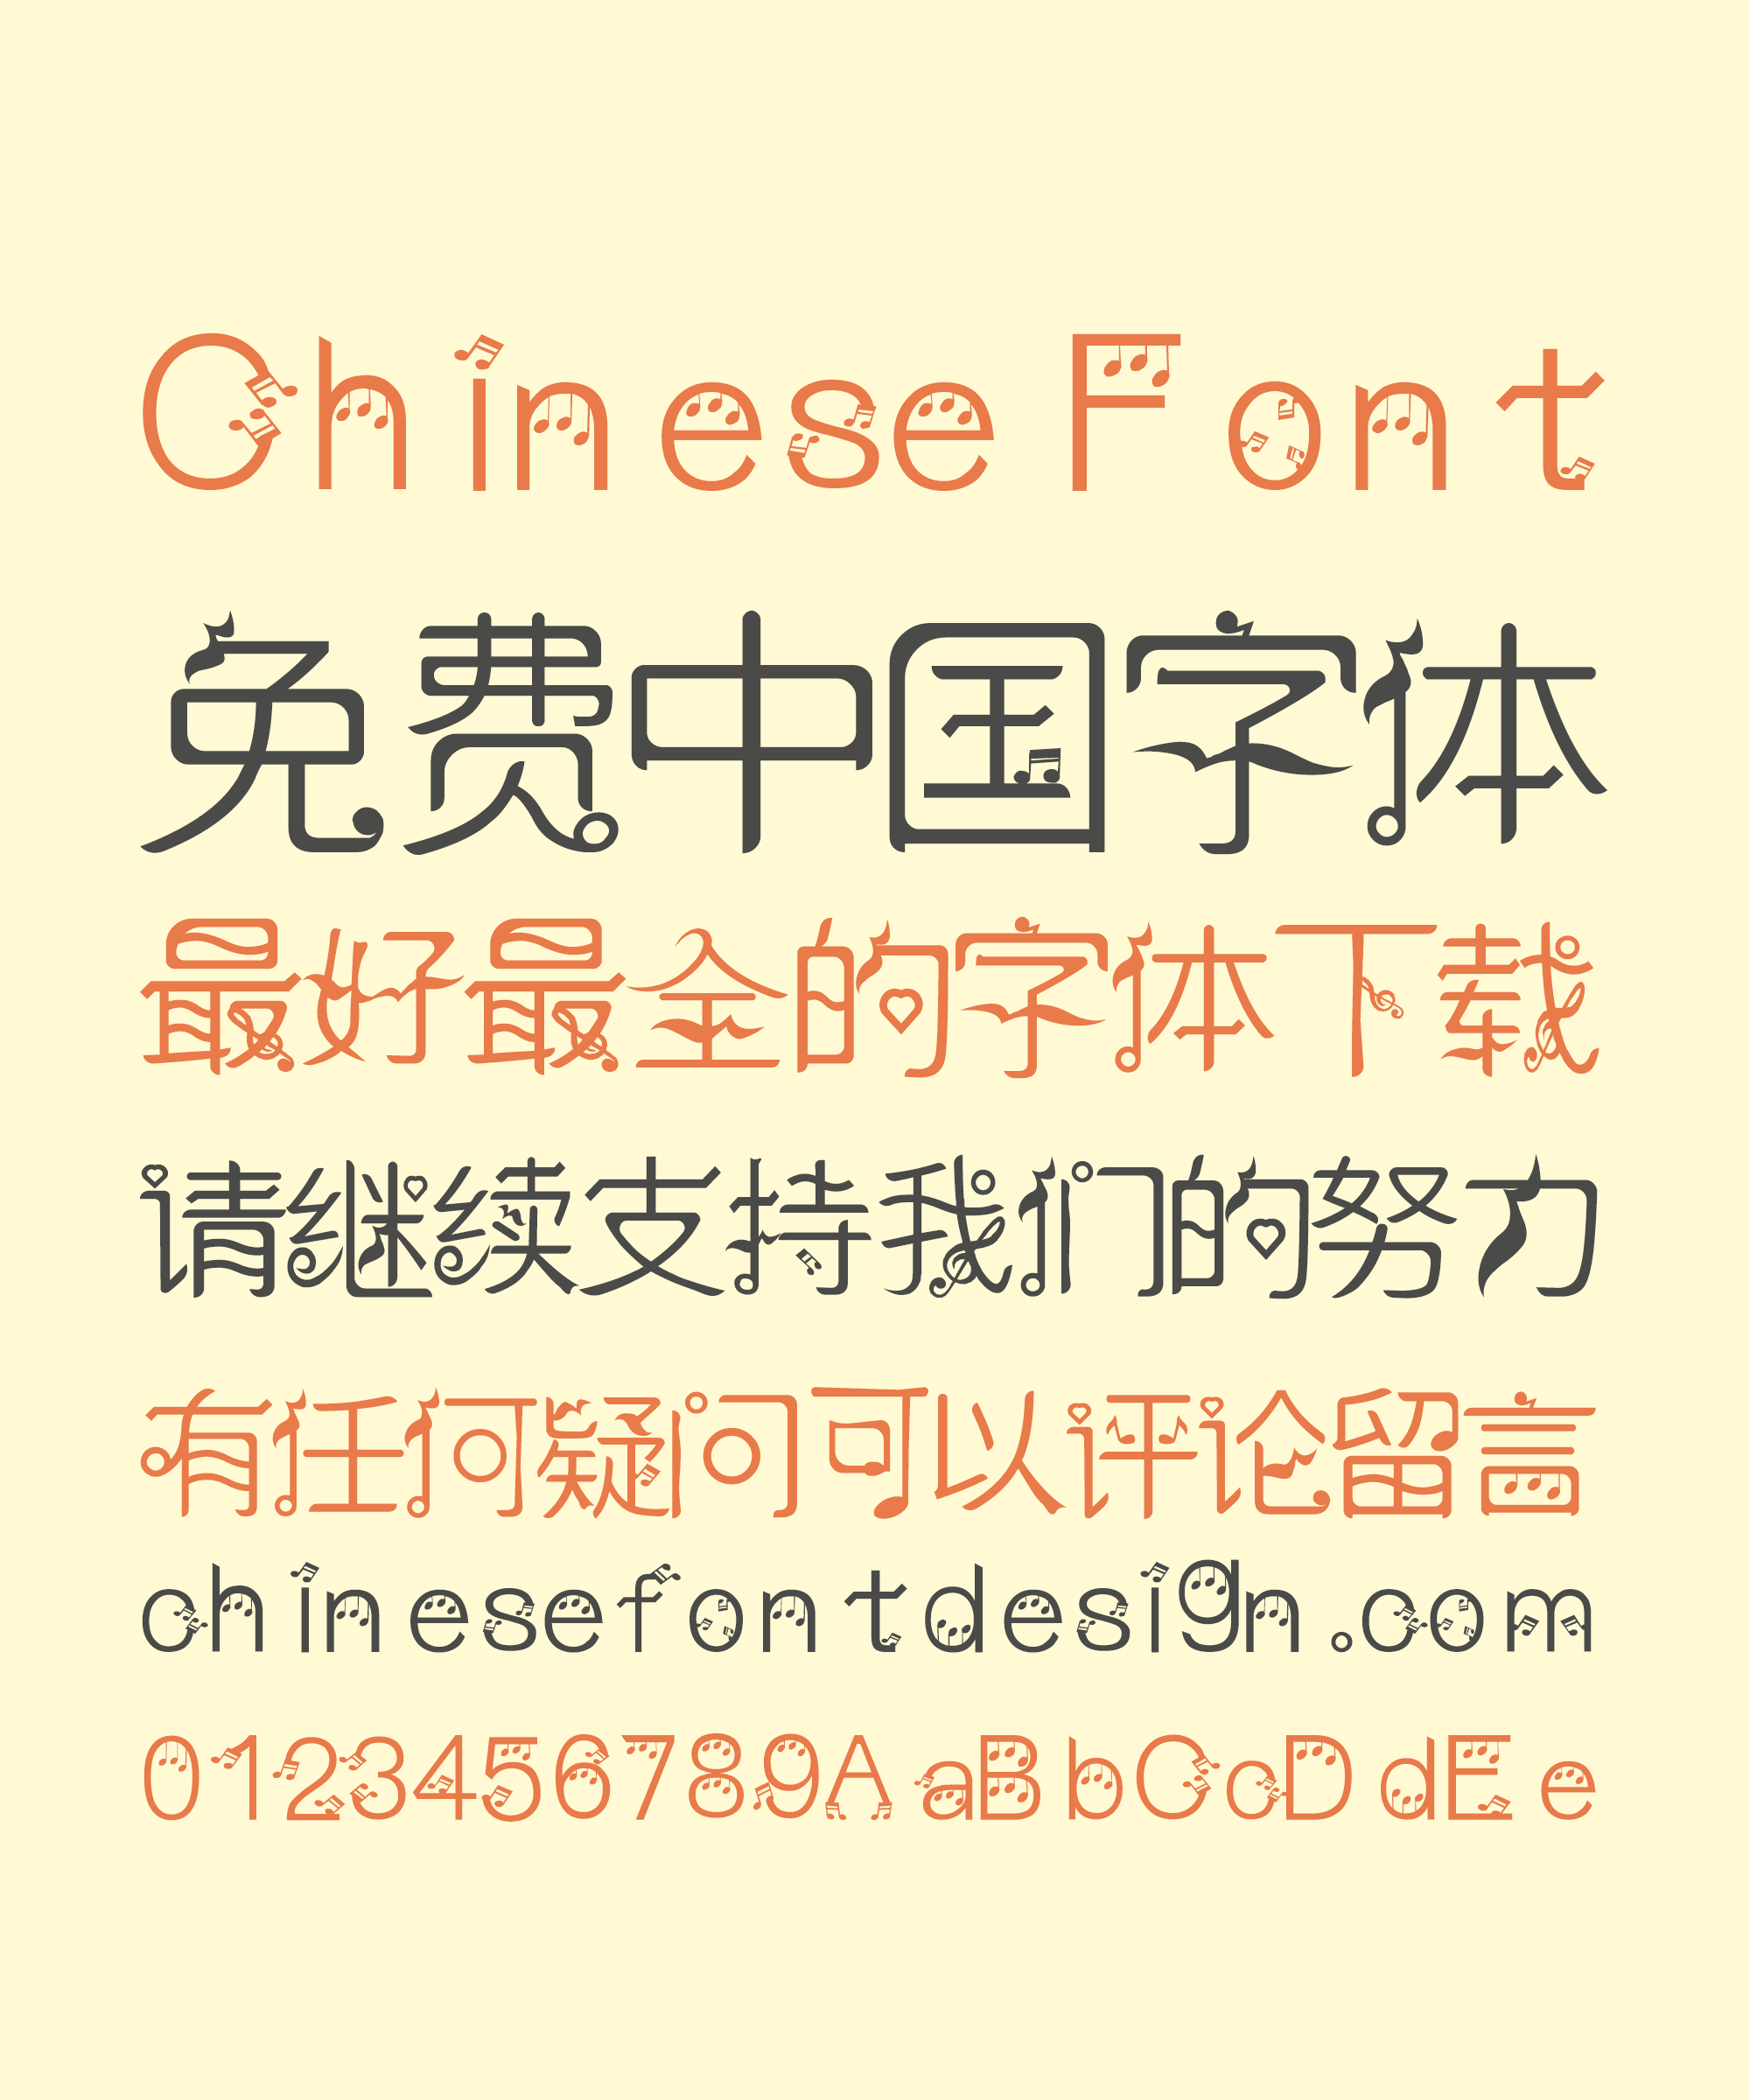 Chinesefontdesign.com 2019 01 22 06 15 38 66 